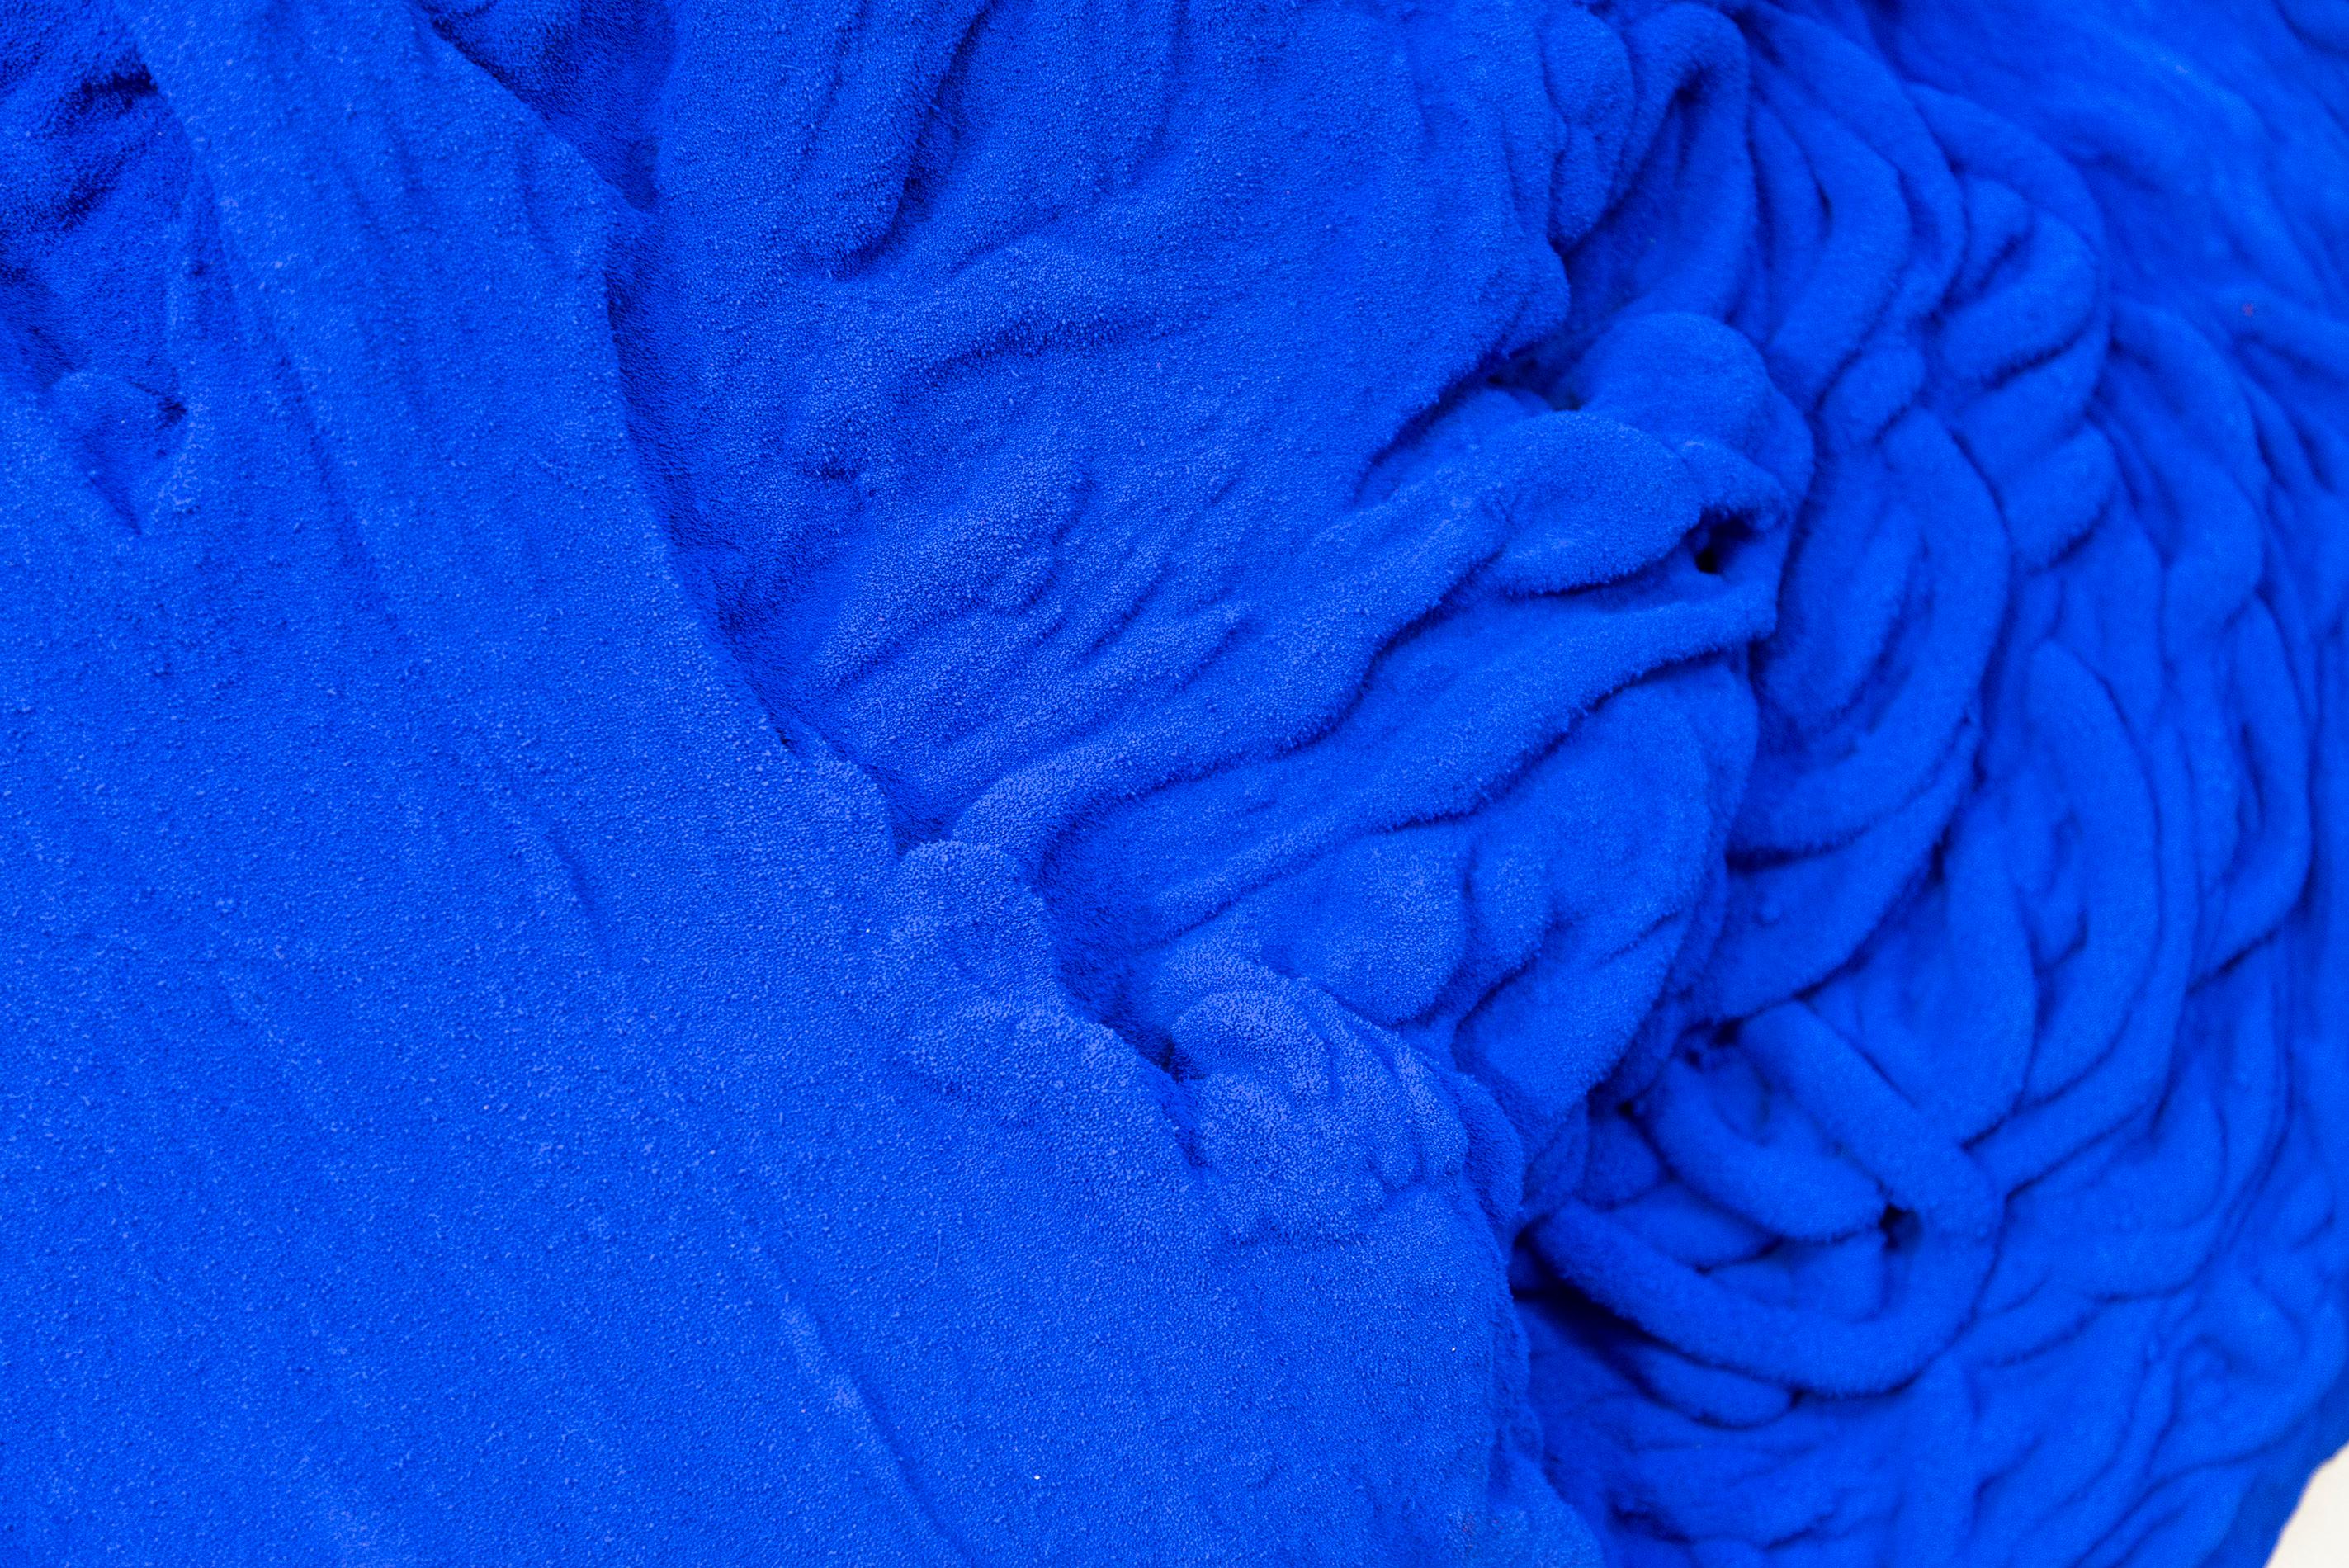 Blue Matter 2 - matte, blue, textured, abstract, mixed media wall sculpture For Sale 3